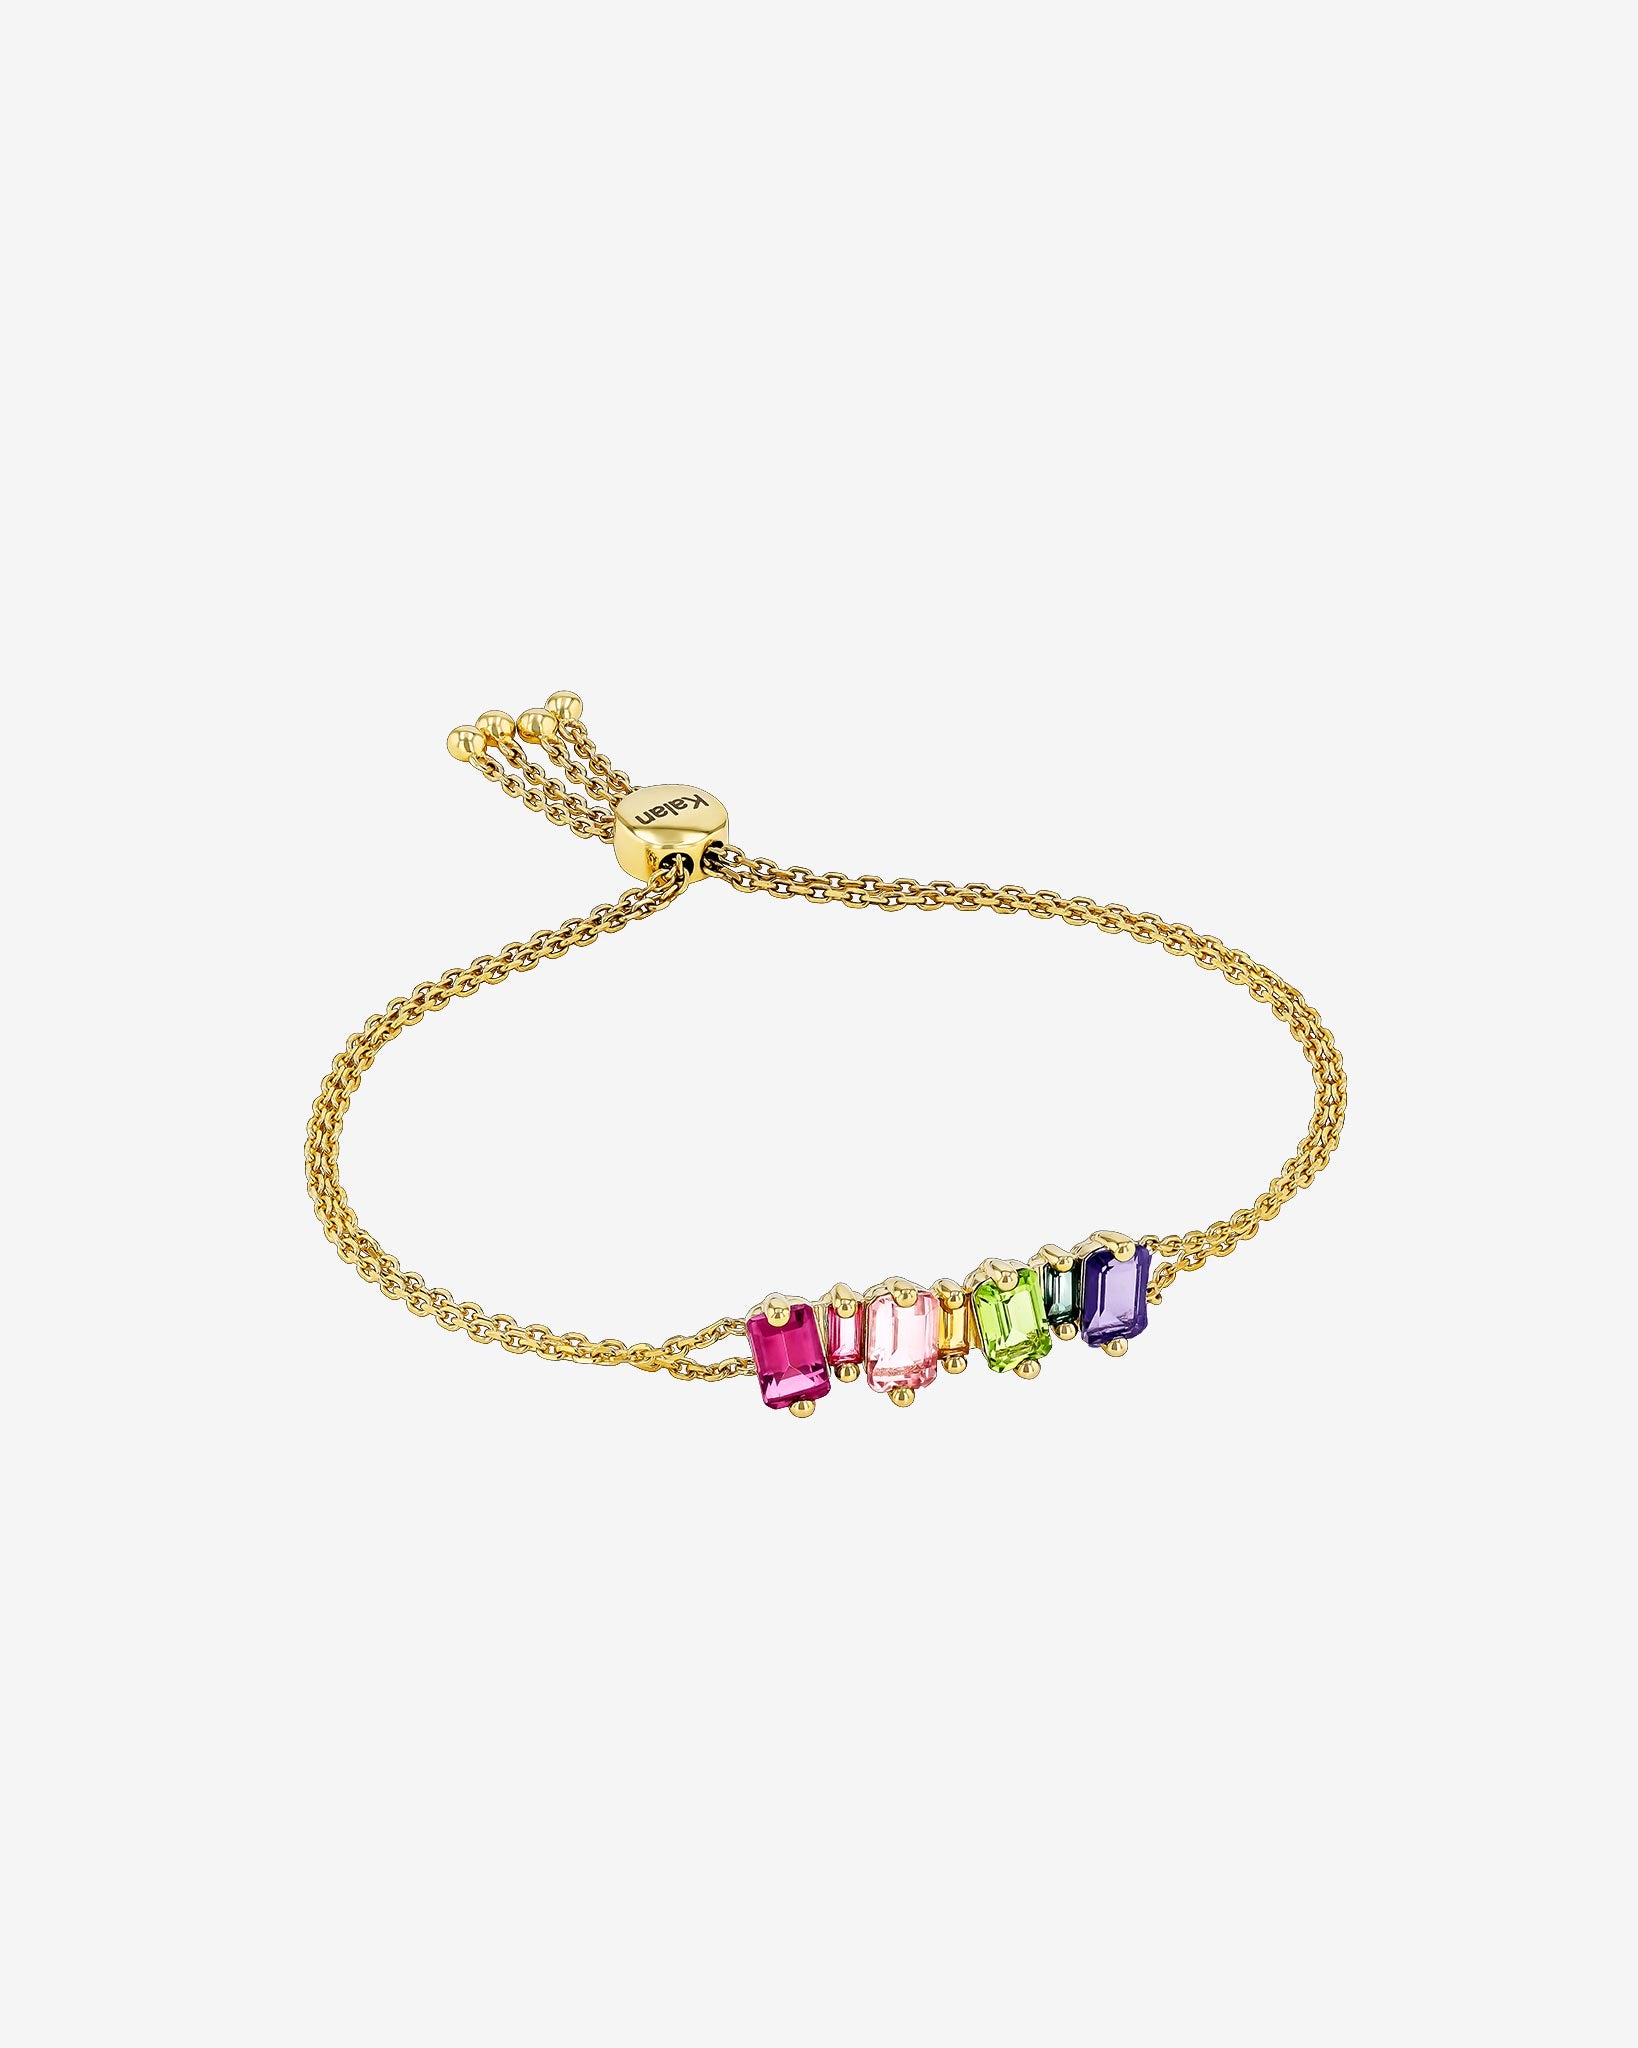 Kalan By Suzanne Kalan Ann Rainbow Pulley Bracelet in 14k yellow gold